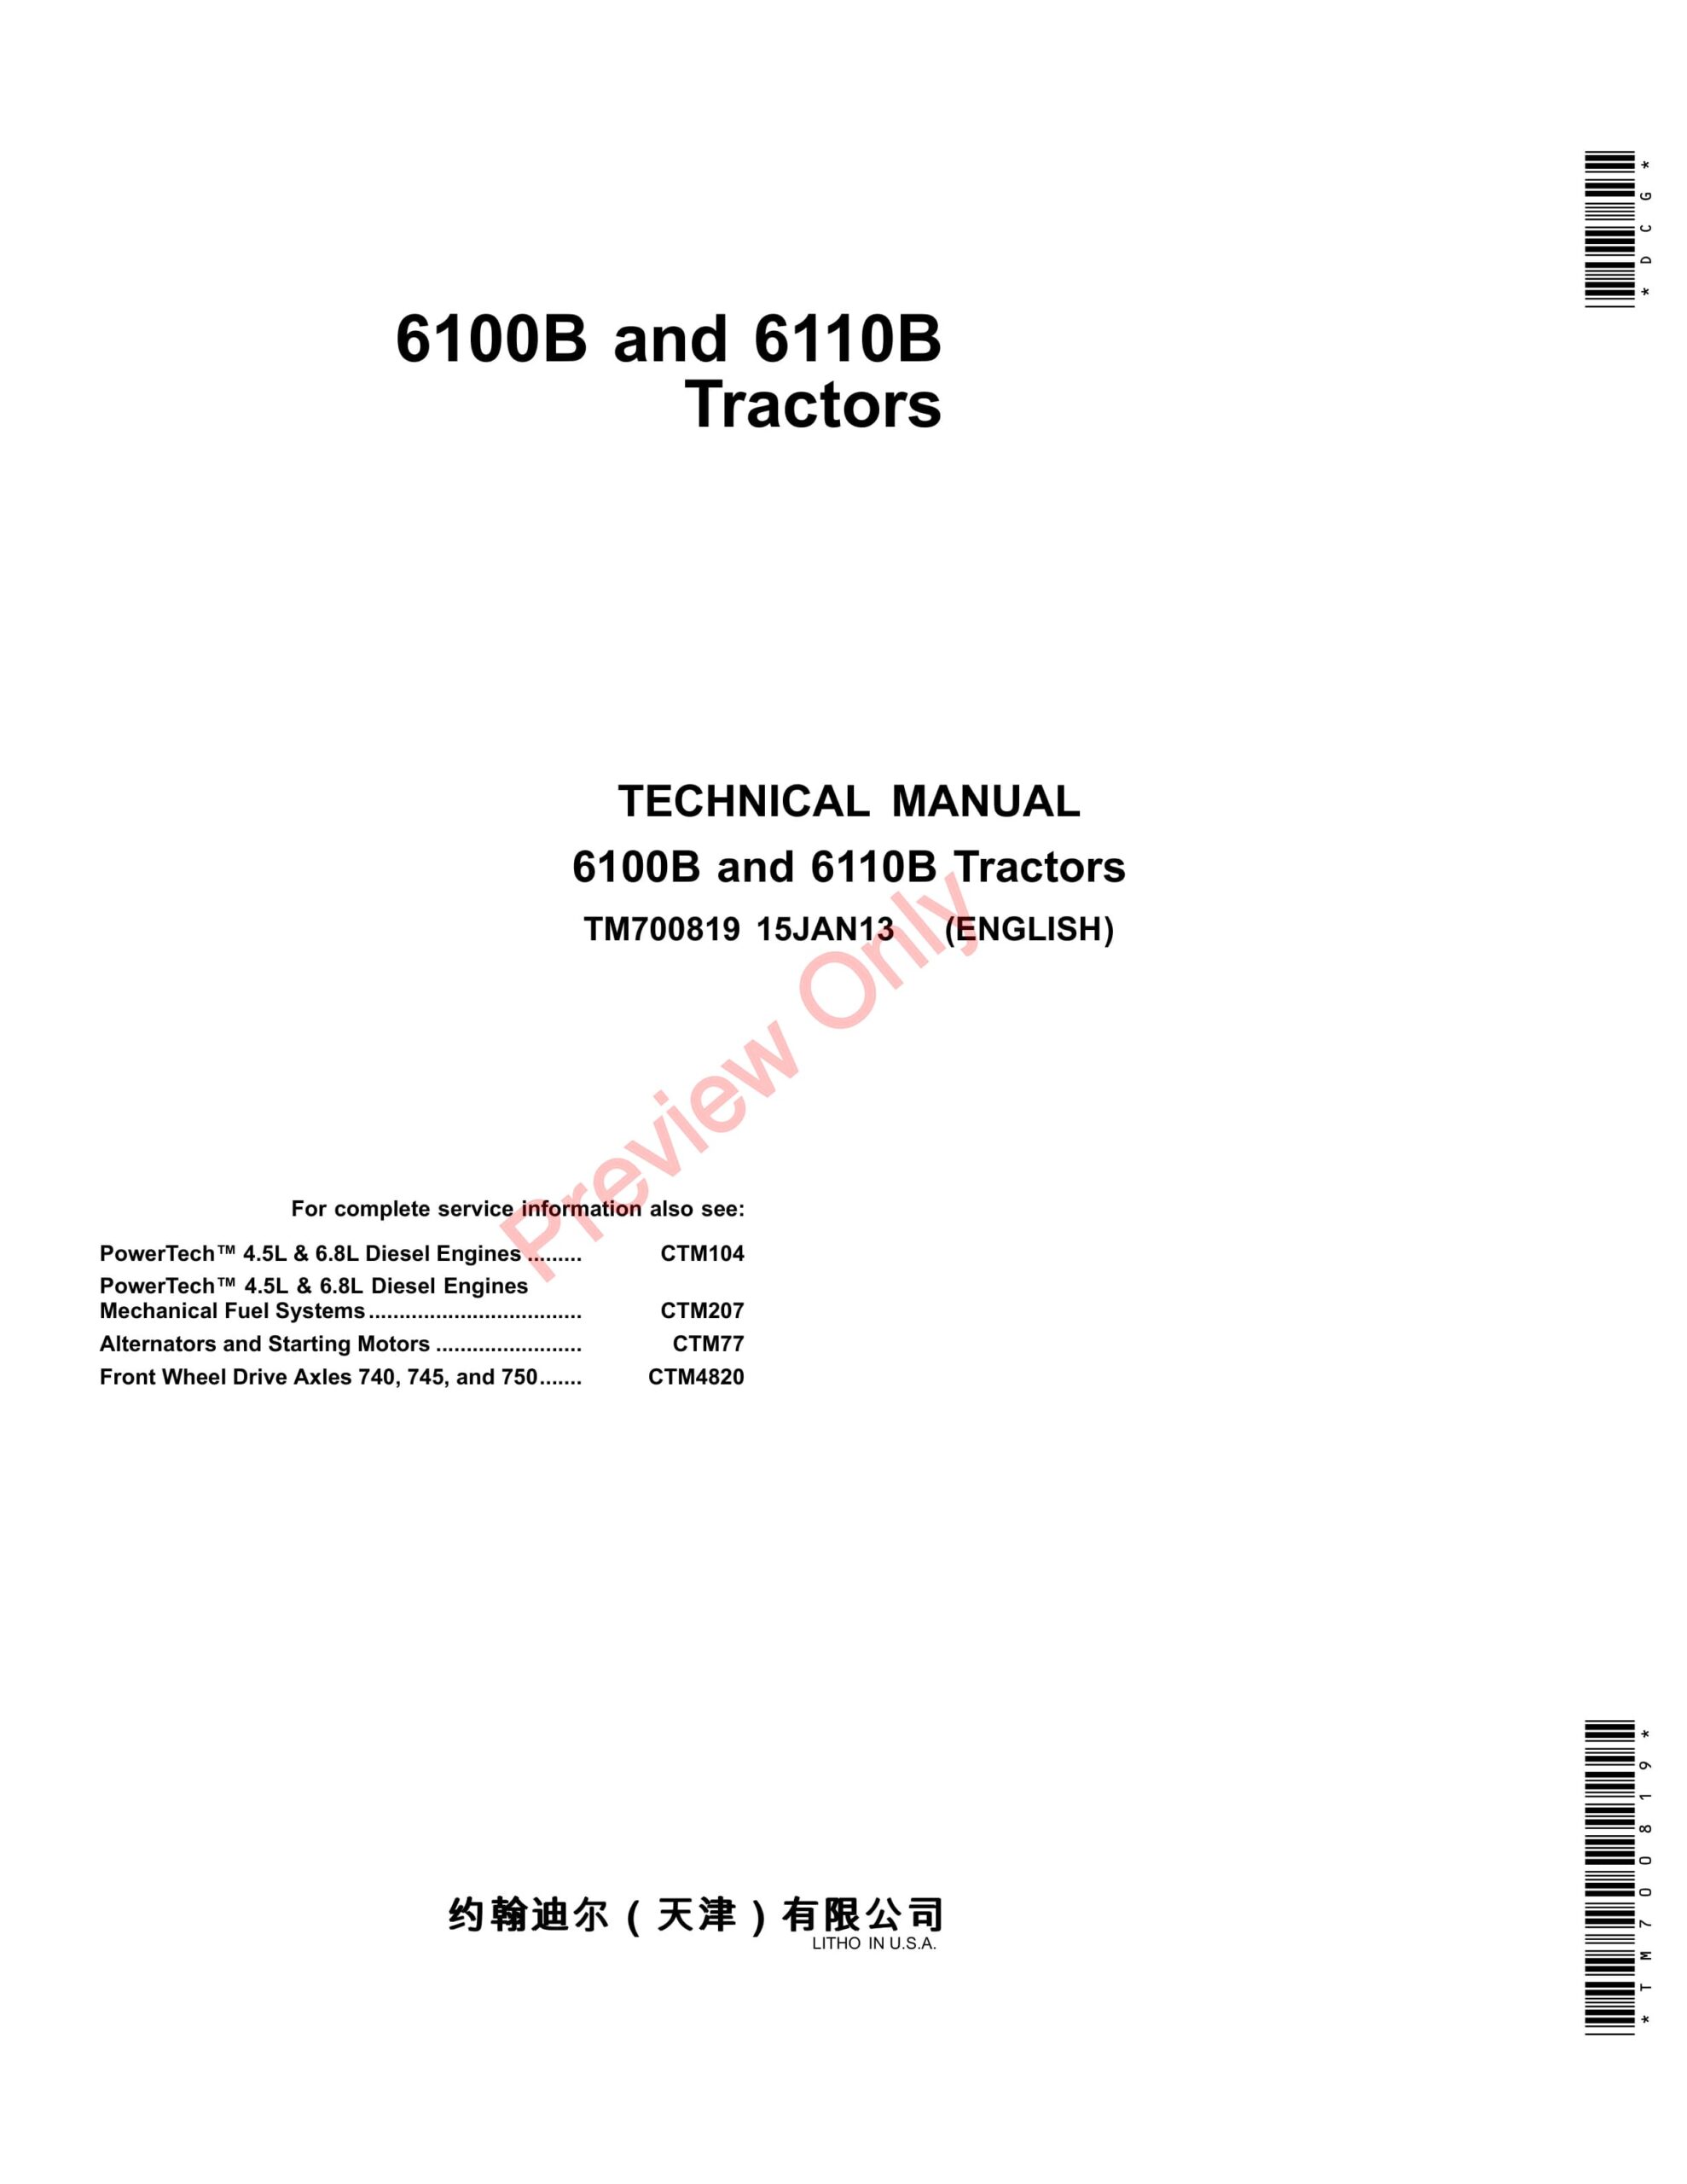 John Deere 6100B and 6110B Tractors Technical Manual TM700819 15JAN13-1